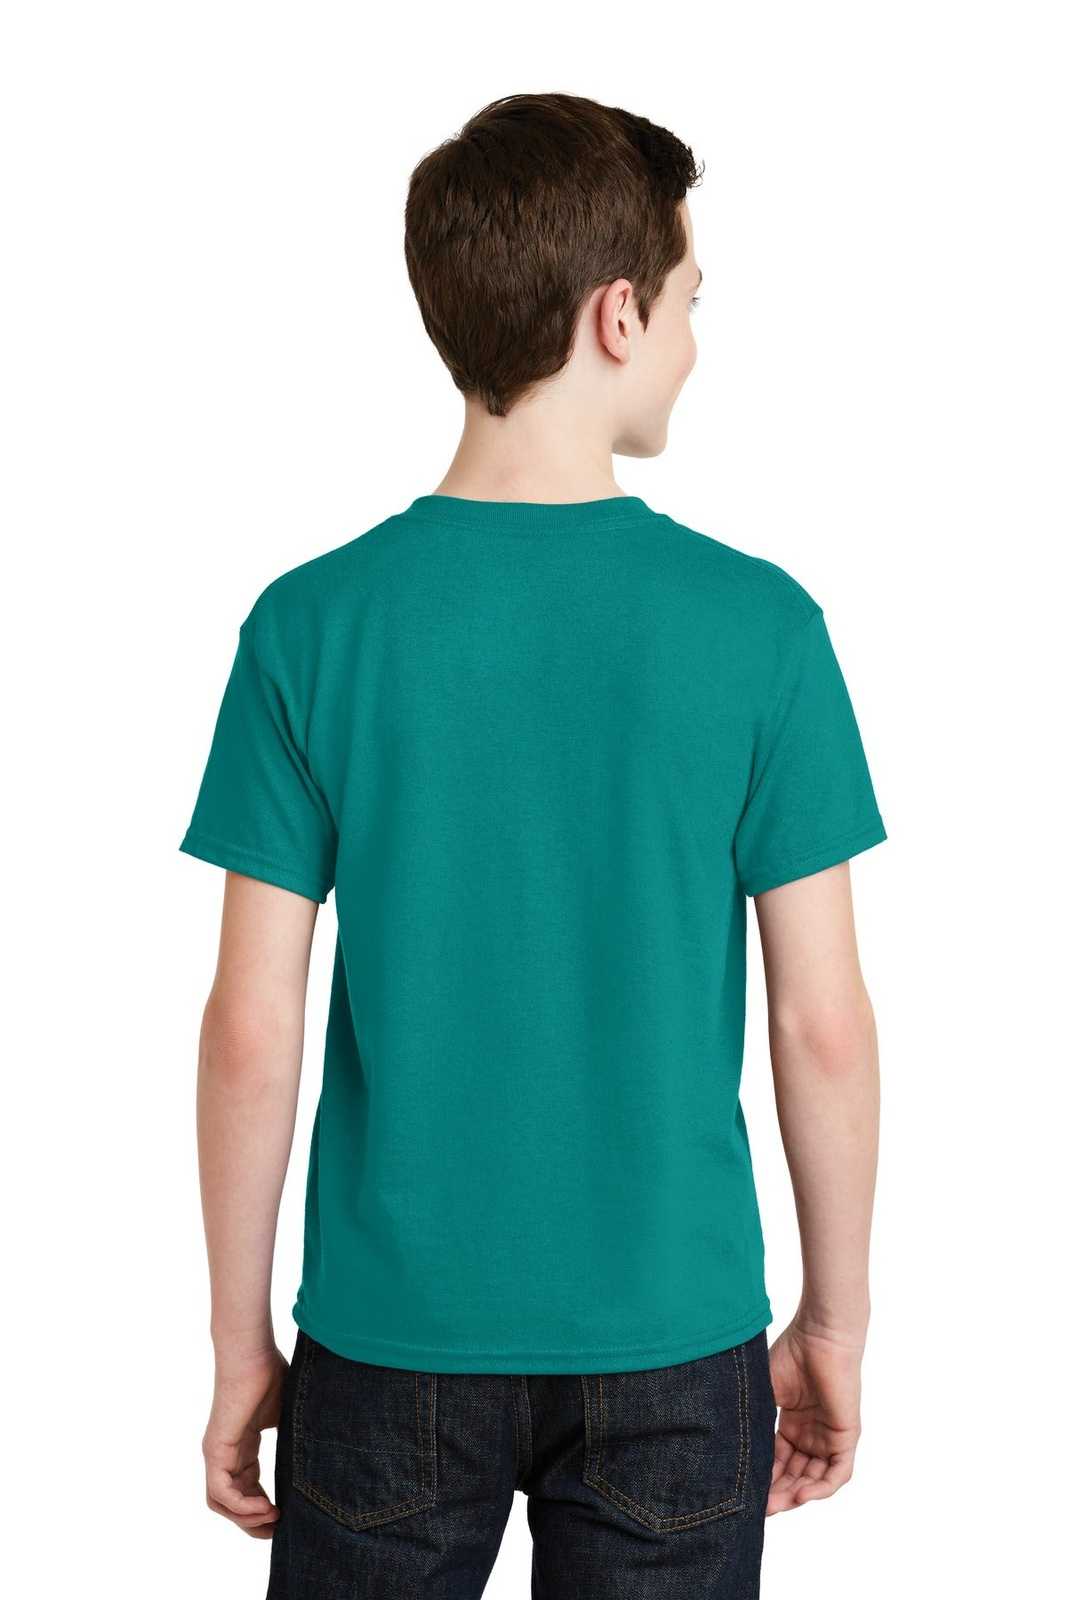 Gildan 8000B Youth Dryblend 50 Cotton/50 Poly T-Shirt - Jade Dome - HIT a Double